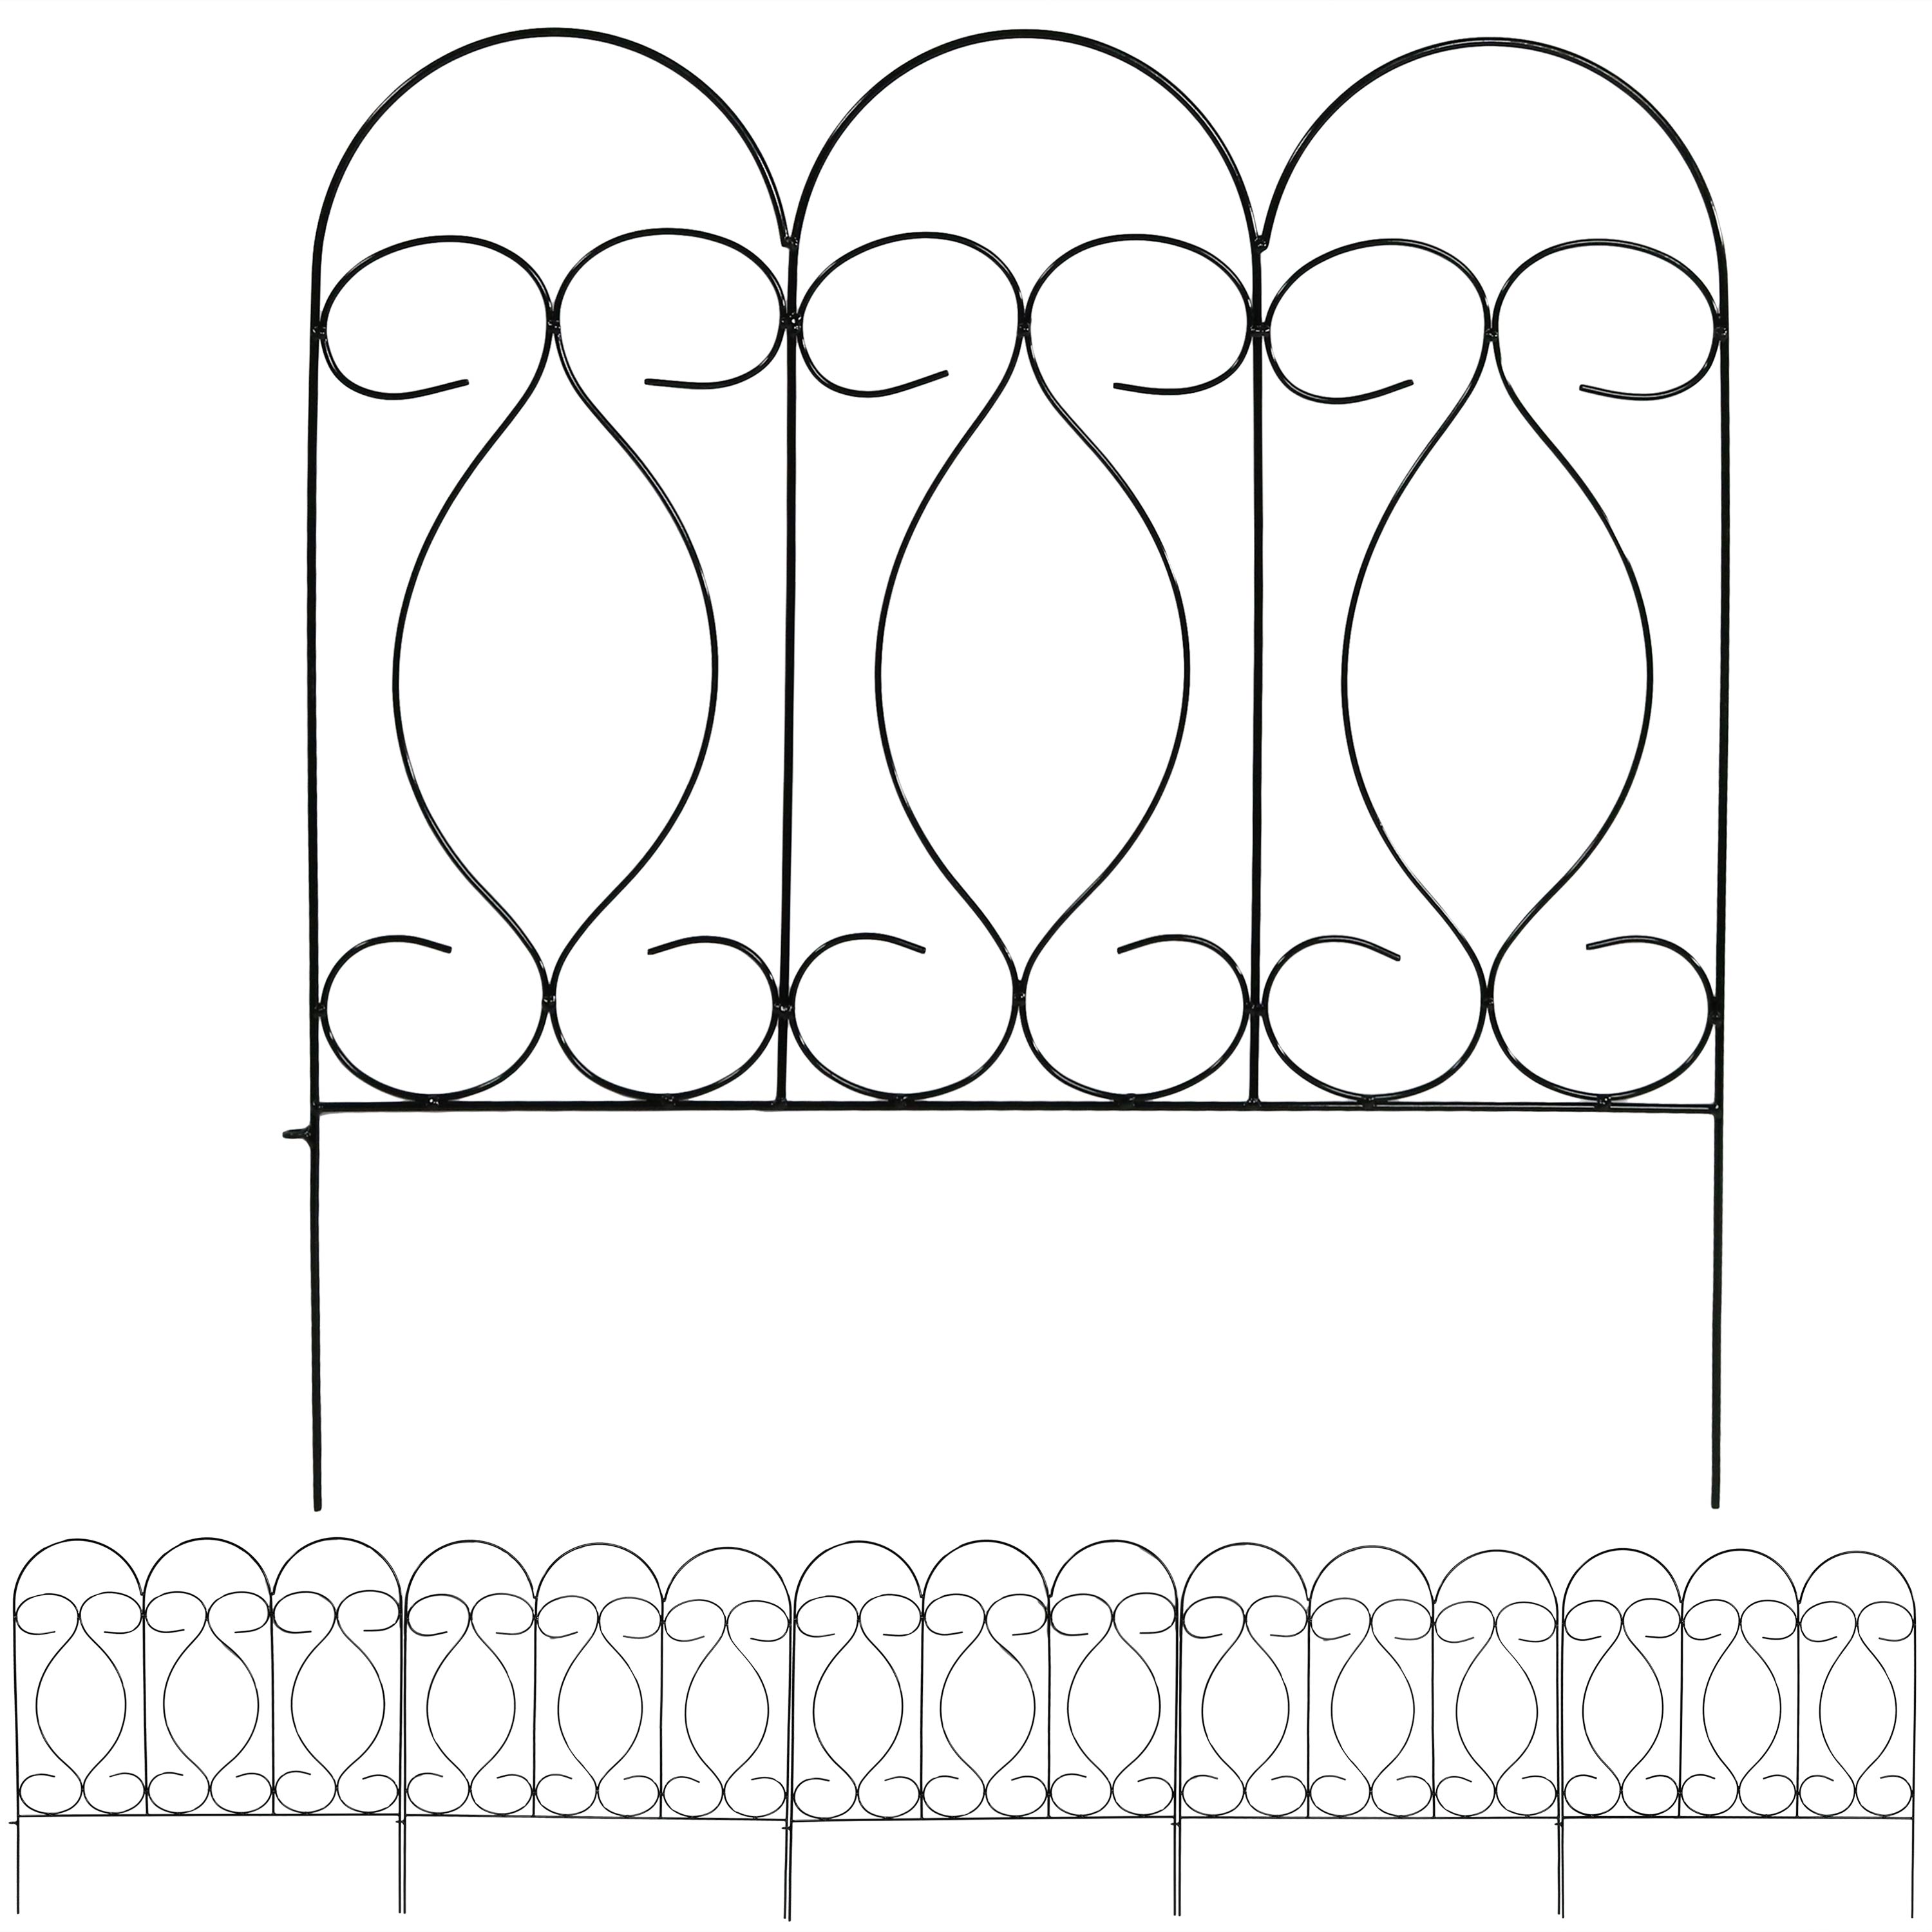 5-Piece Traditional Garden Border Fencing - 10 ft - Black